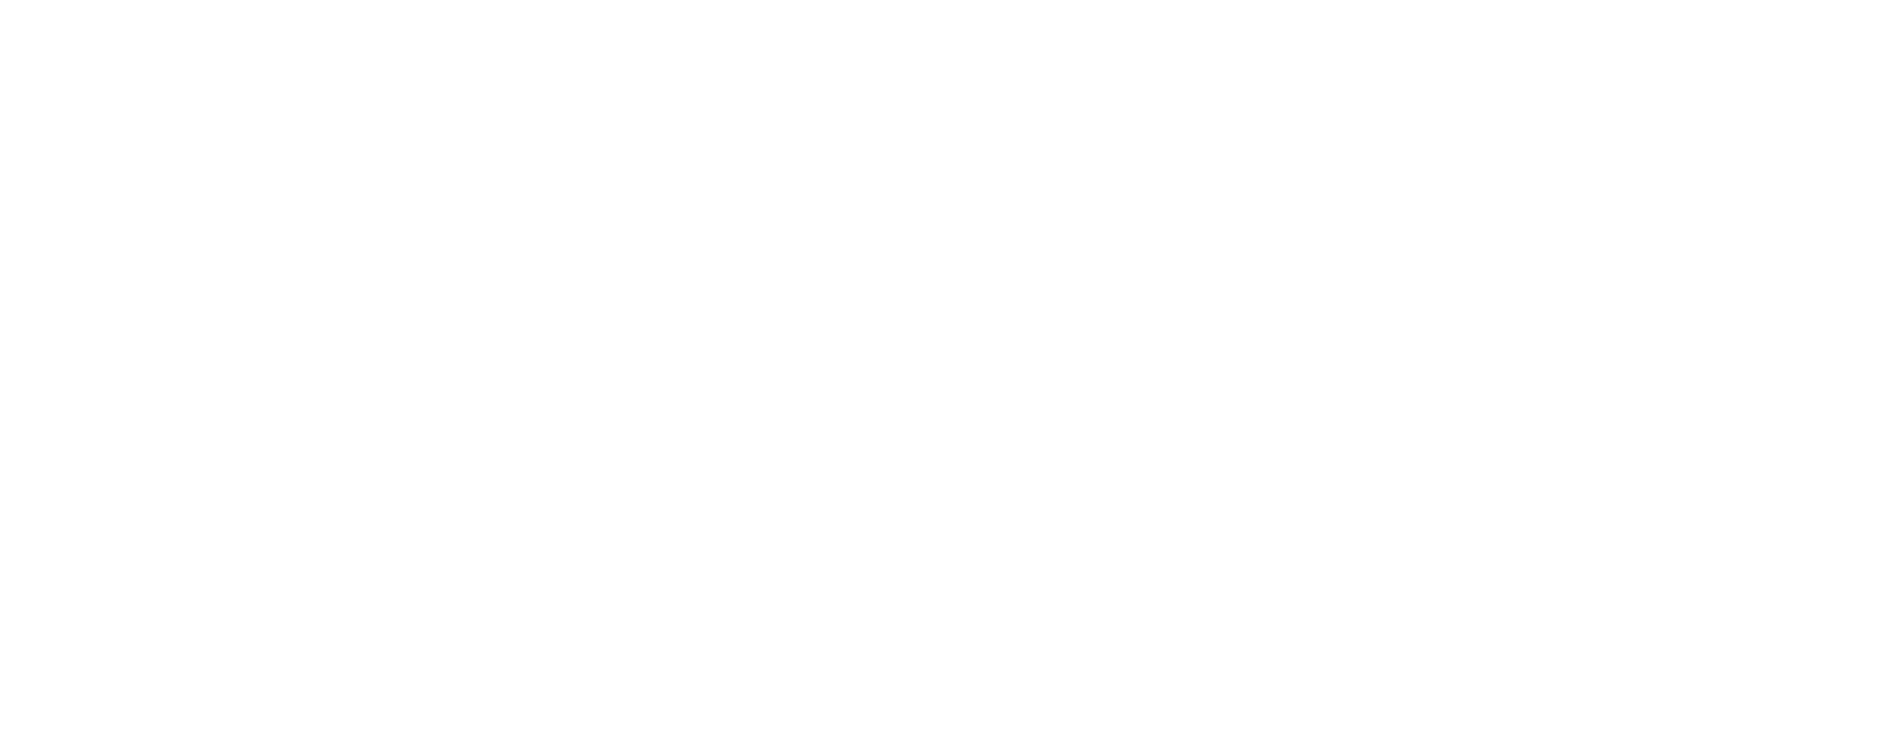 BioMatV4Net